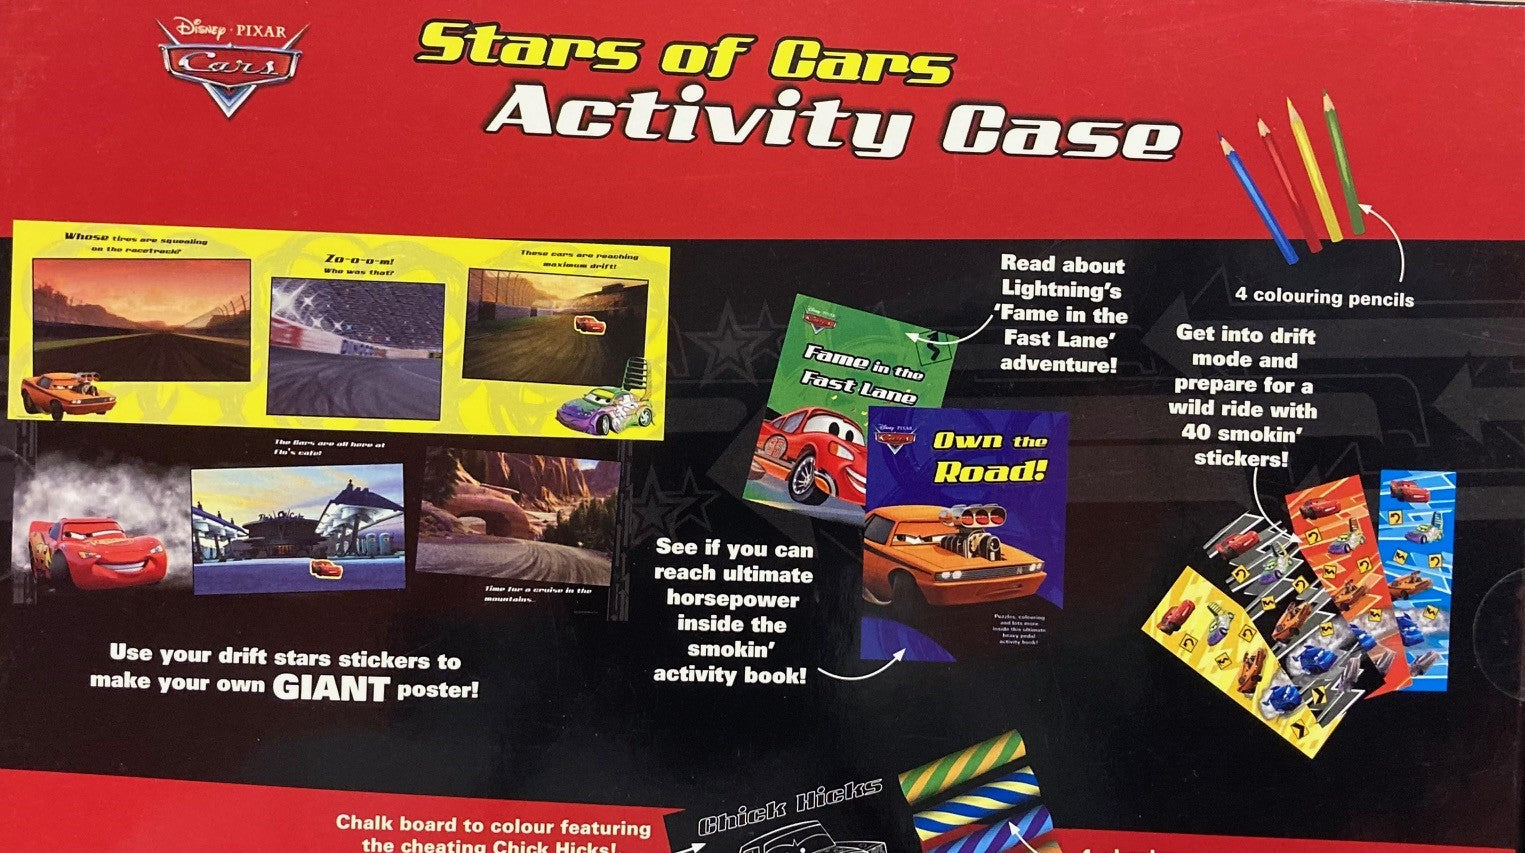 Disney Pixar Cars Activity Kit